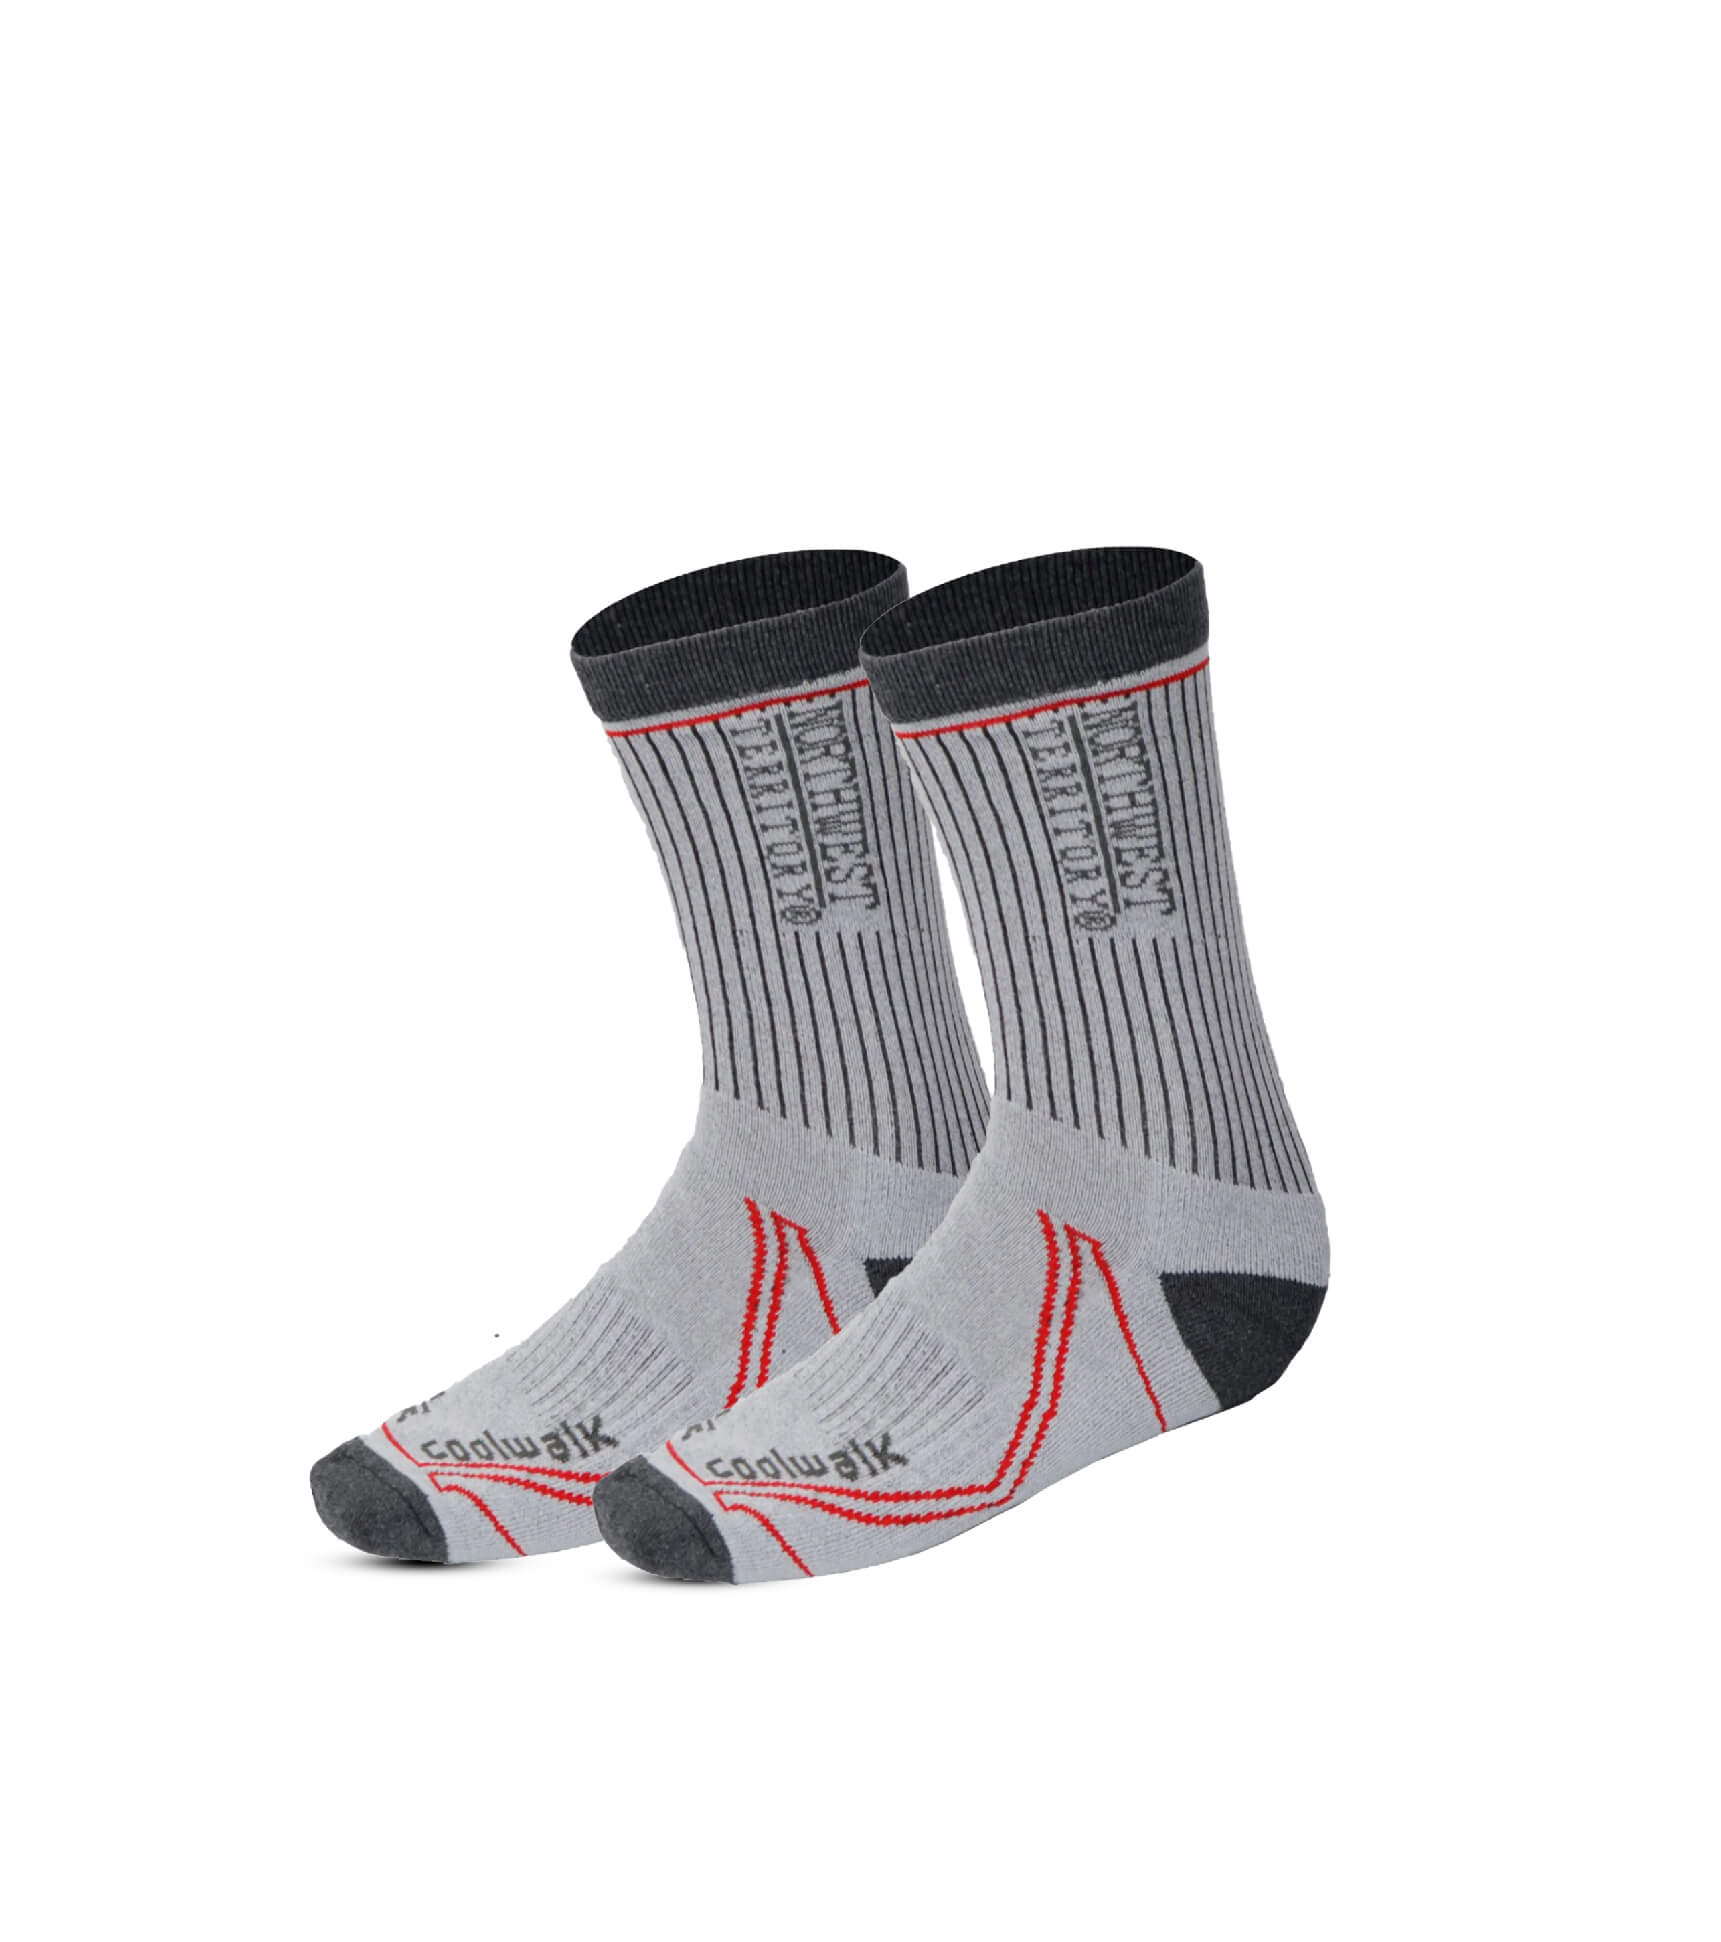 Men's Socks - Men's Socks